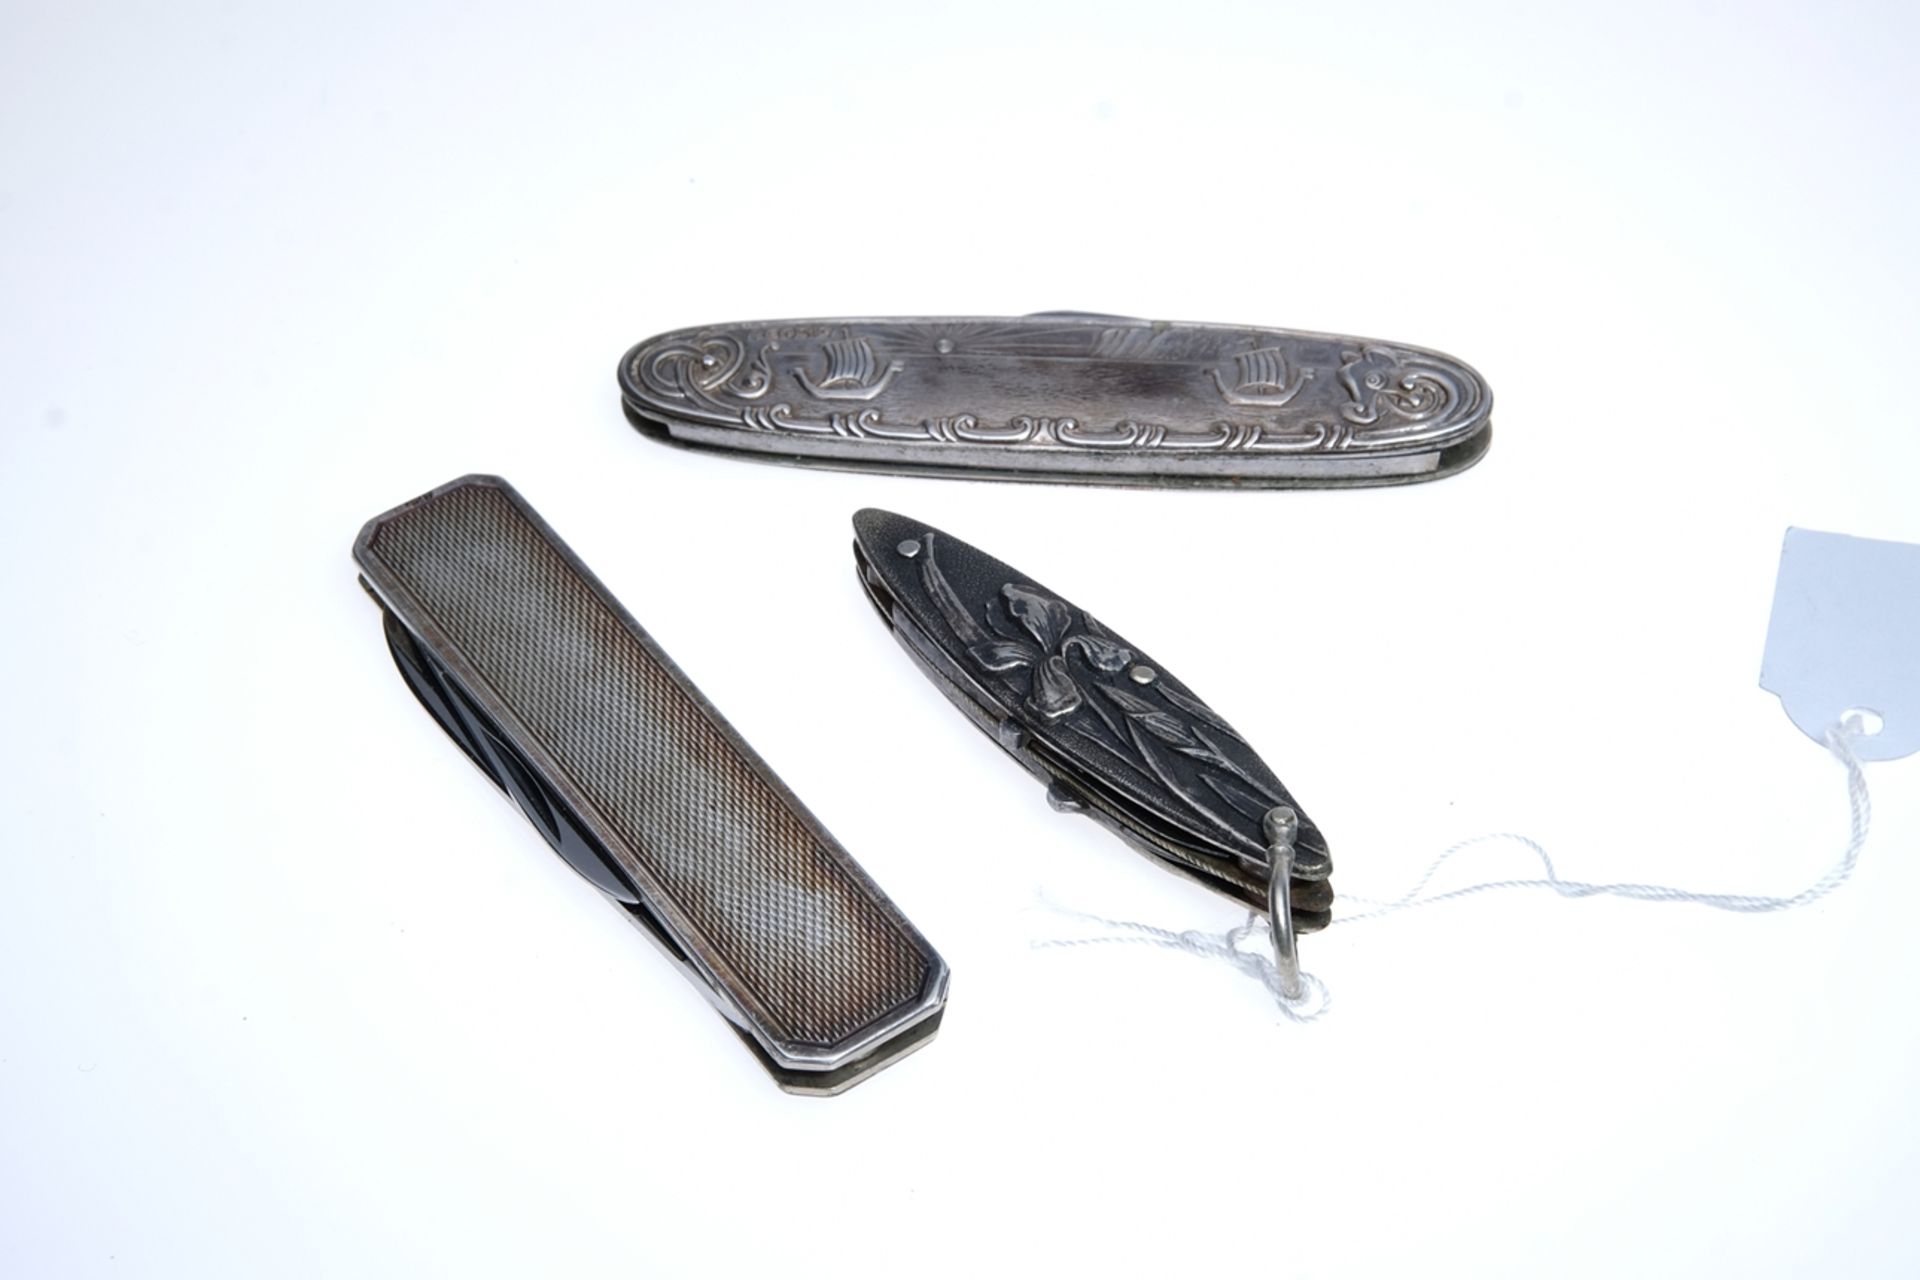 Three pocket knives in various shapes and patterns: